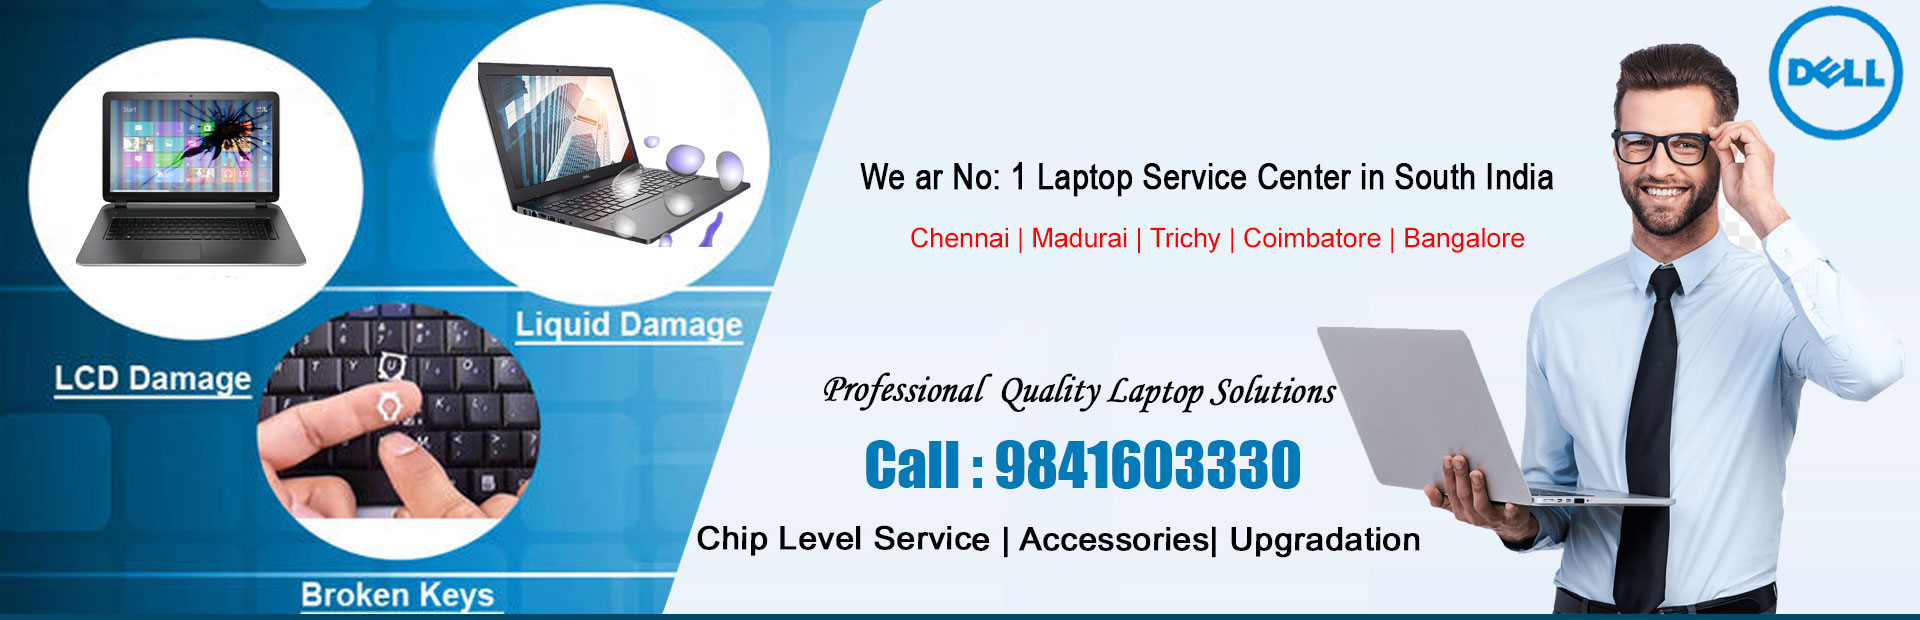 Dell Laptop Service Center in Chennai